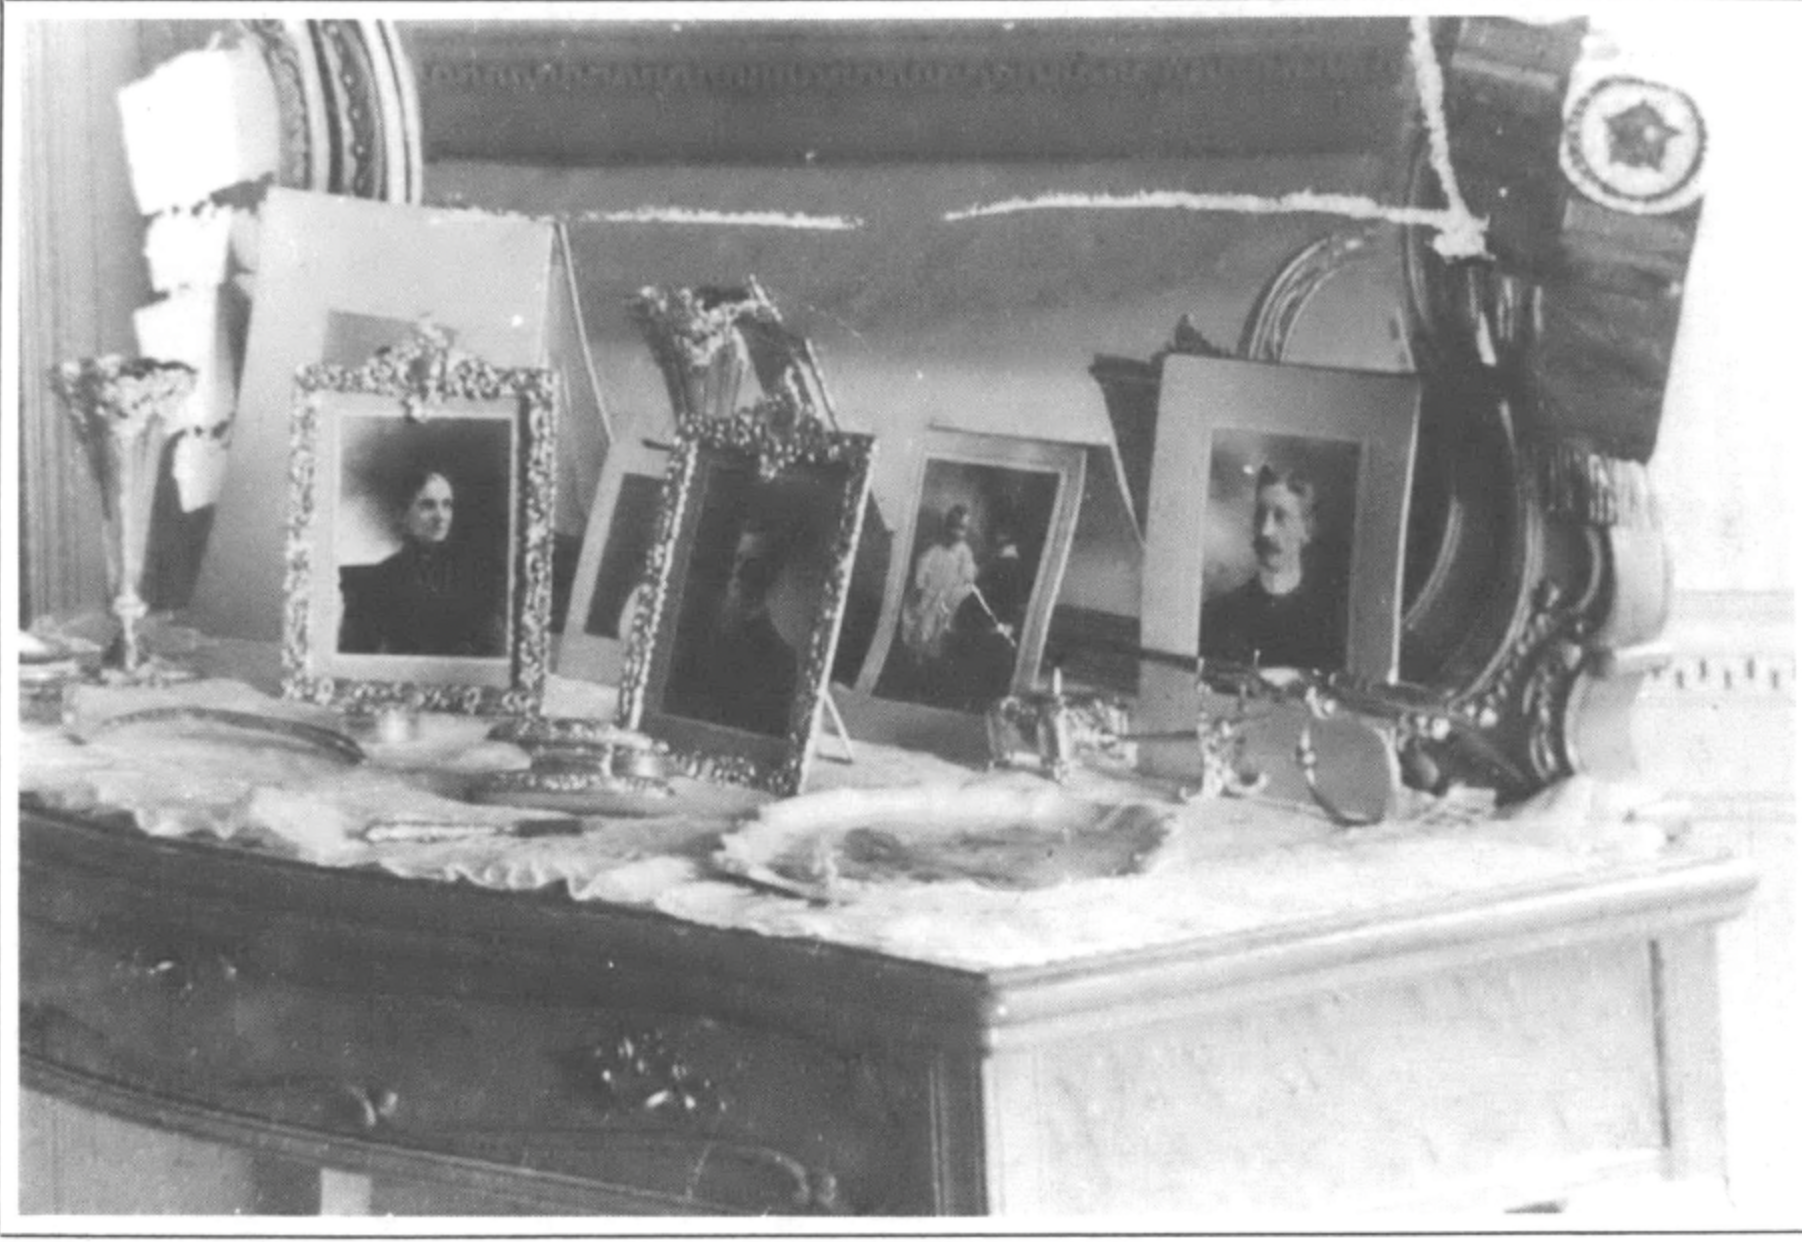 photo frames on a nightstand/dresser